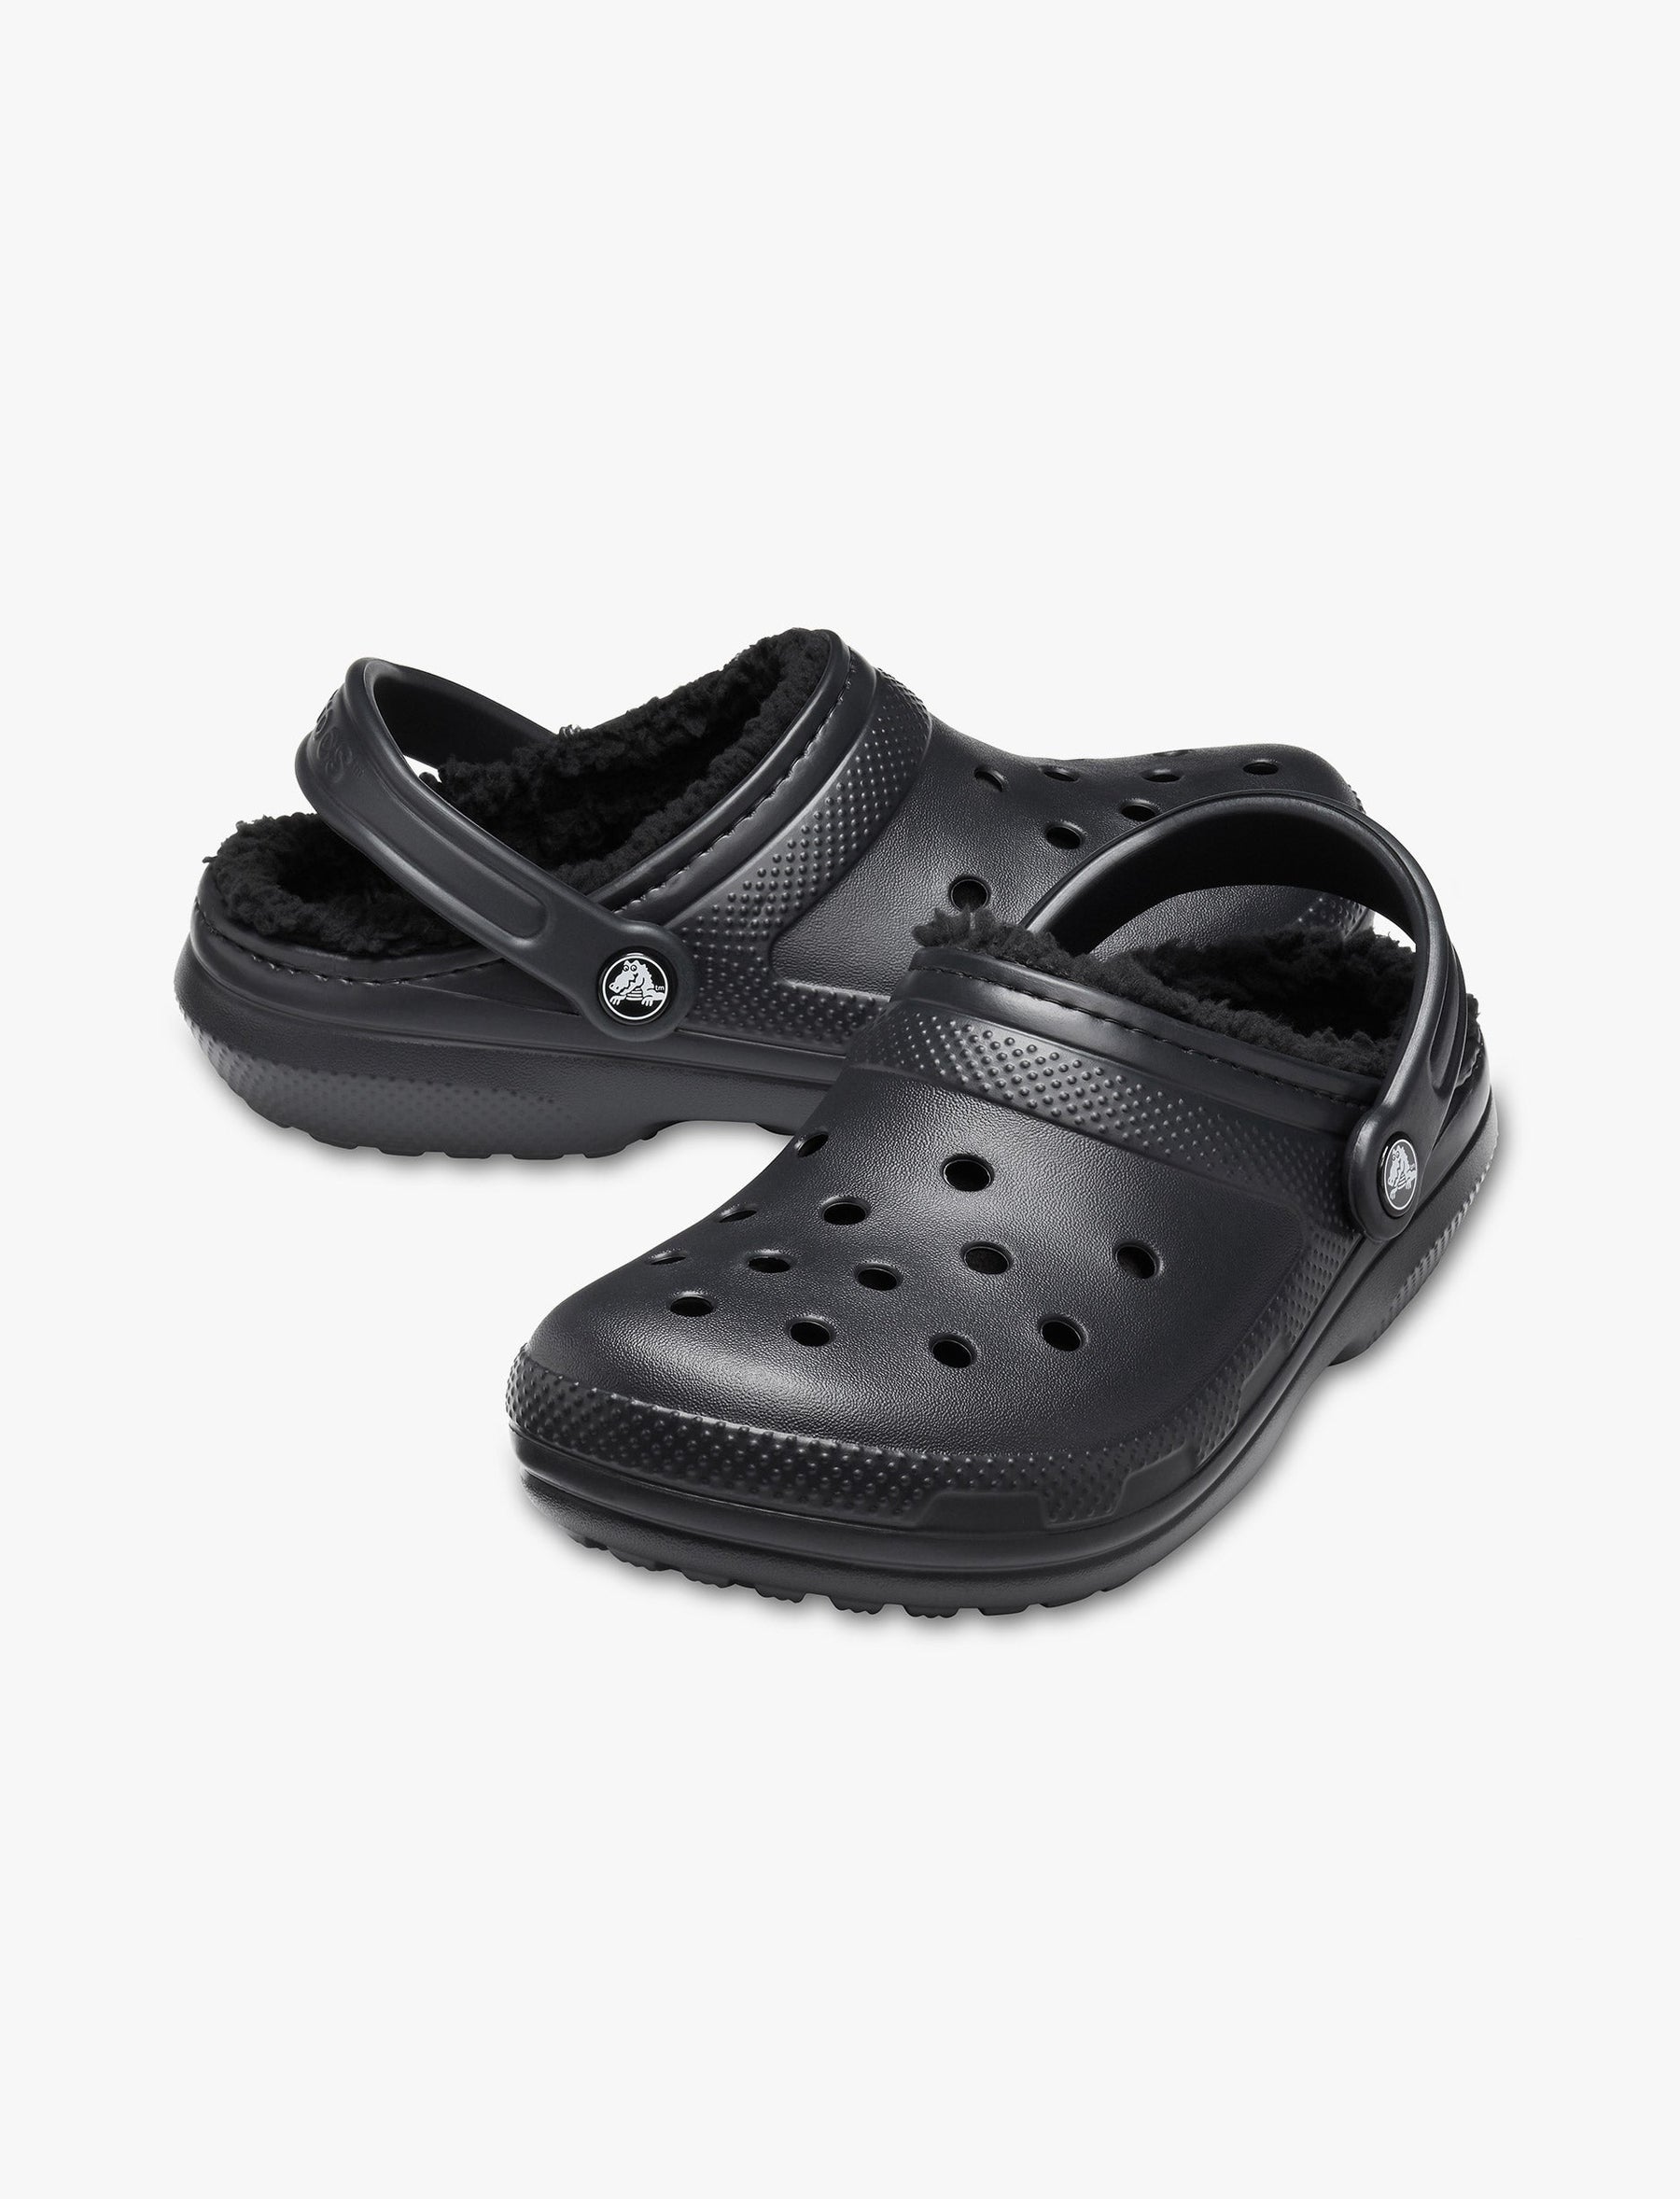 Crocs Classic Lined Clog - כפכפים פרוותיים קרוקס בצבע שחור/שחור-Crocs-37-38-נאקו